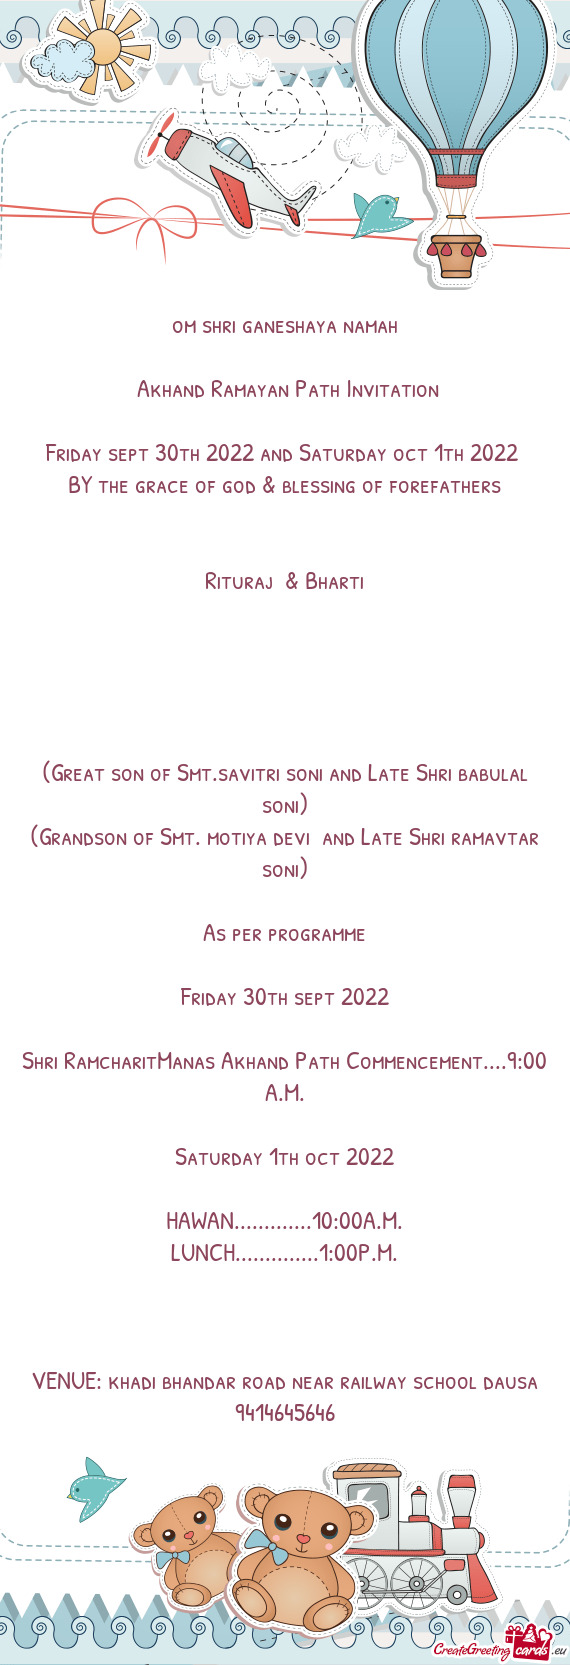 (Great son of Smt.savitri soni and Late Shri babulal soni)